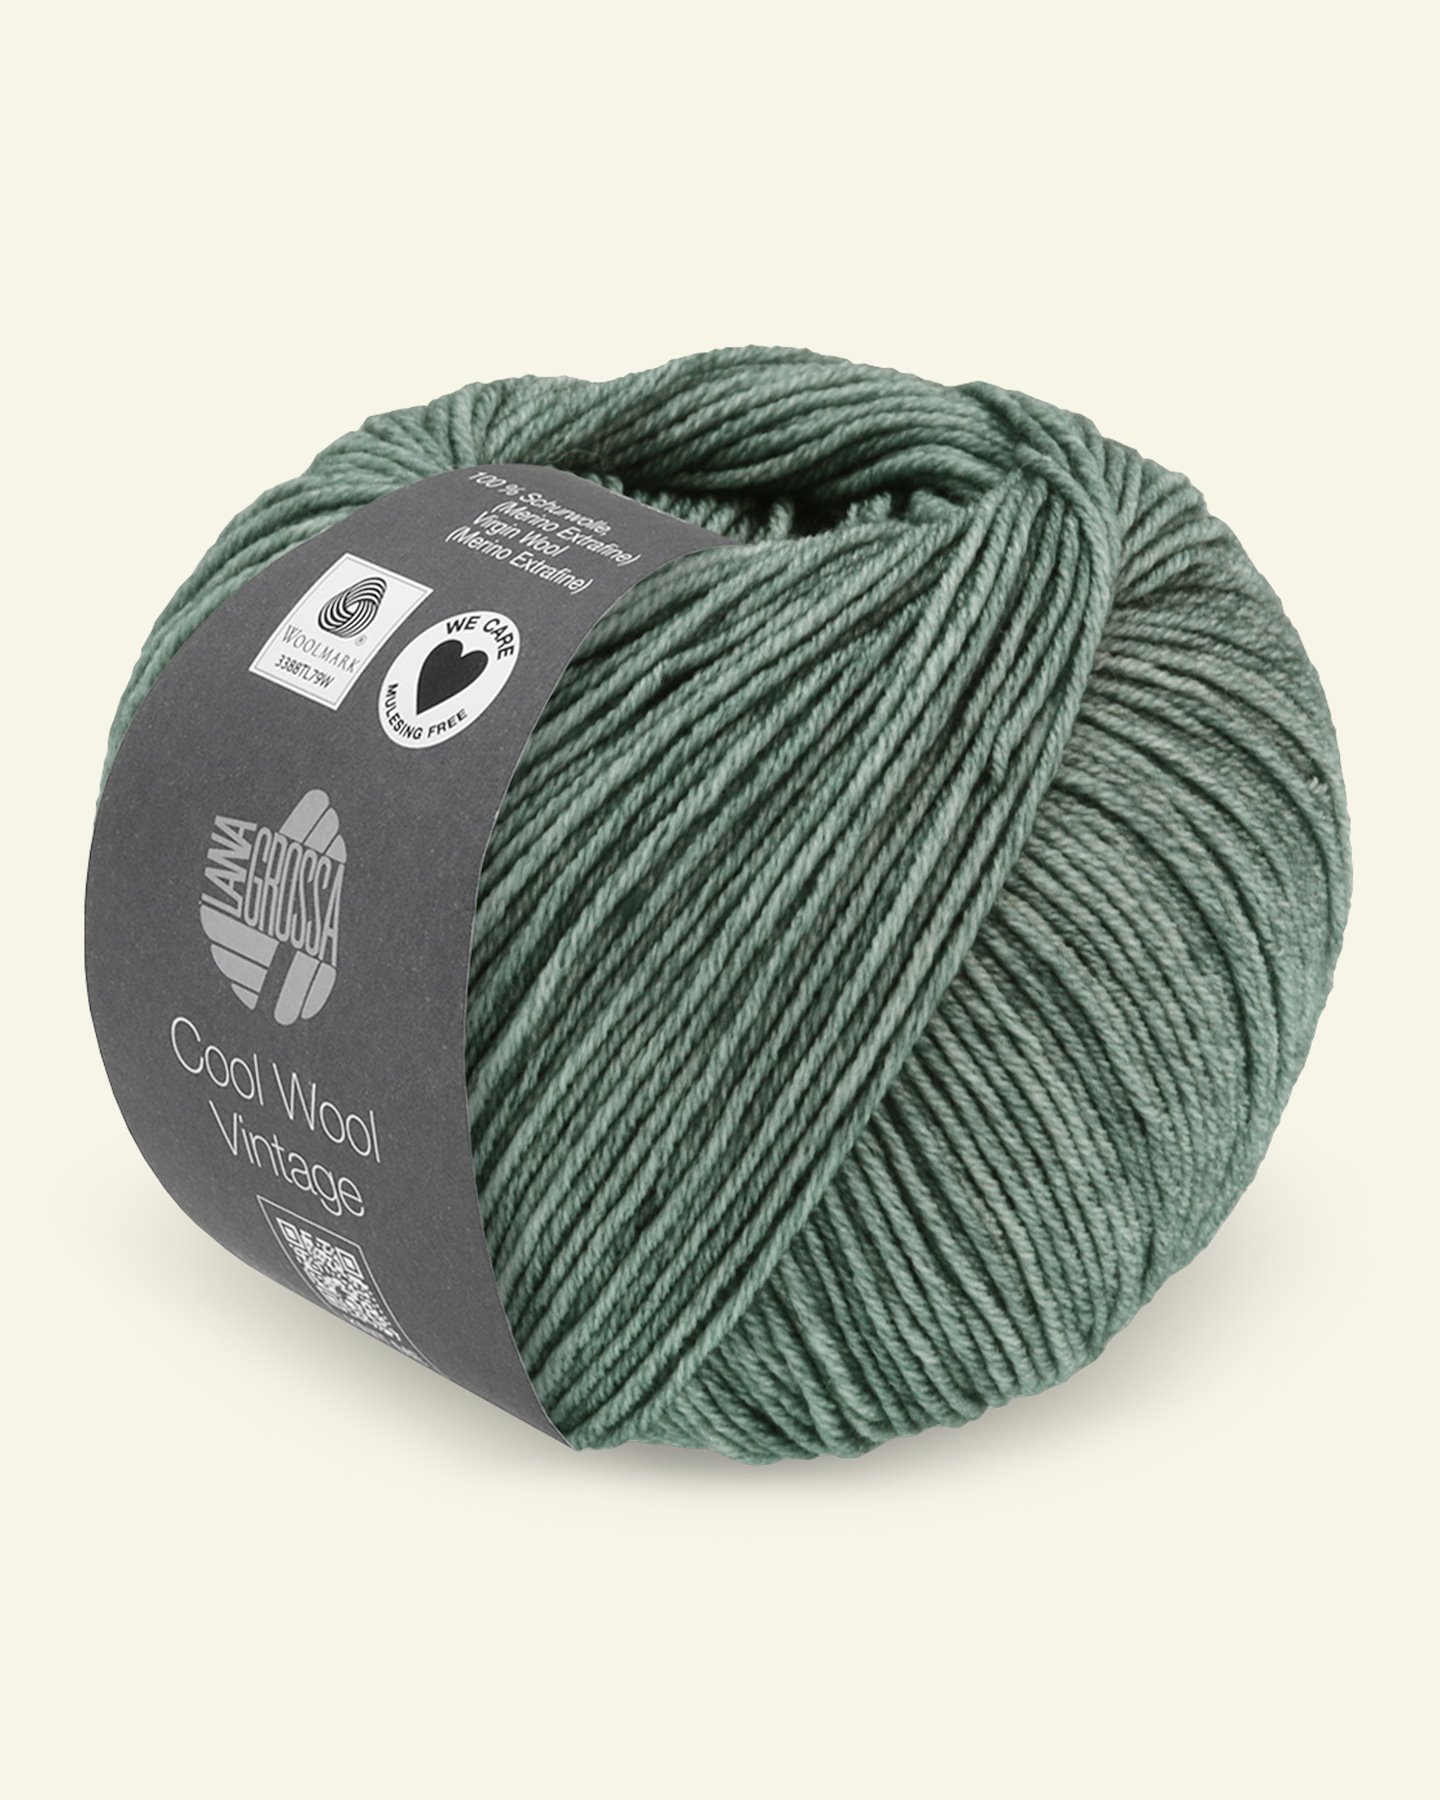 Lana Grossa, extrafine merino wool yarn "Cool Wool Vintage", greygreen 90001082_pack